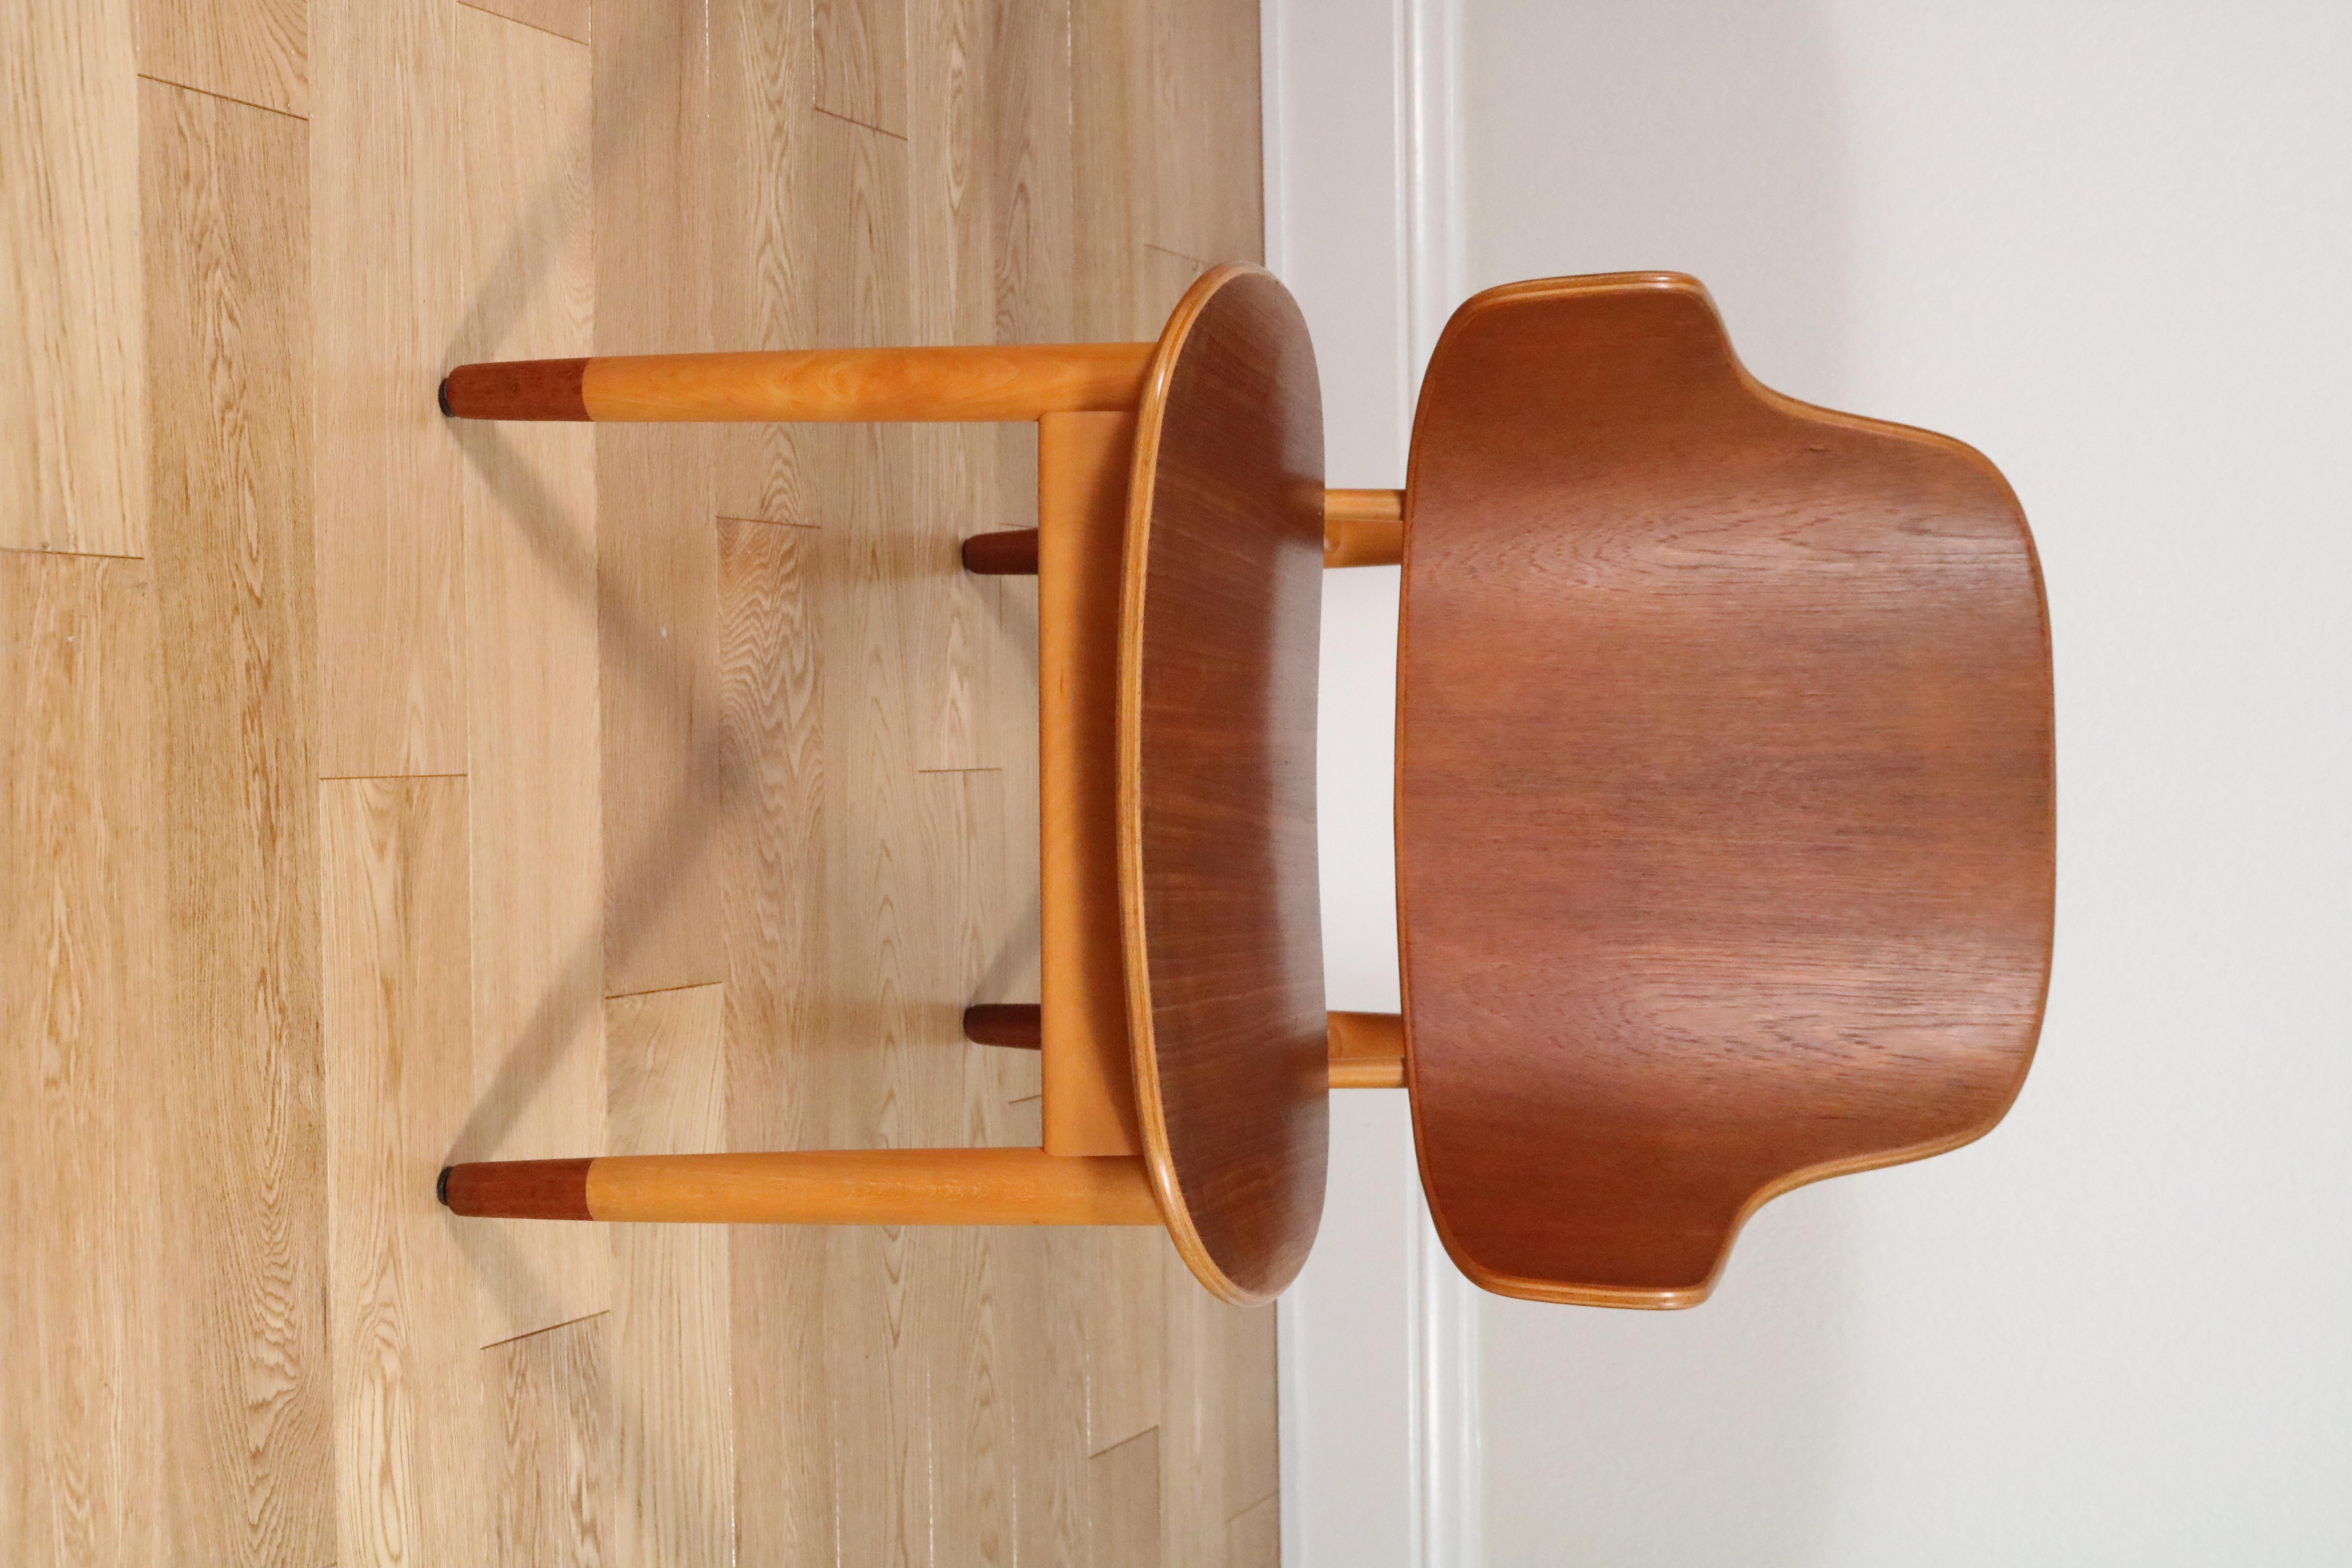 An exquisite original vintage all-wood edition of Ib Kofod-Larsen's classic 'Penguin' chair. Denmark, 1960s.

Beautiful dark teak and beech woods.